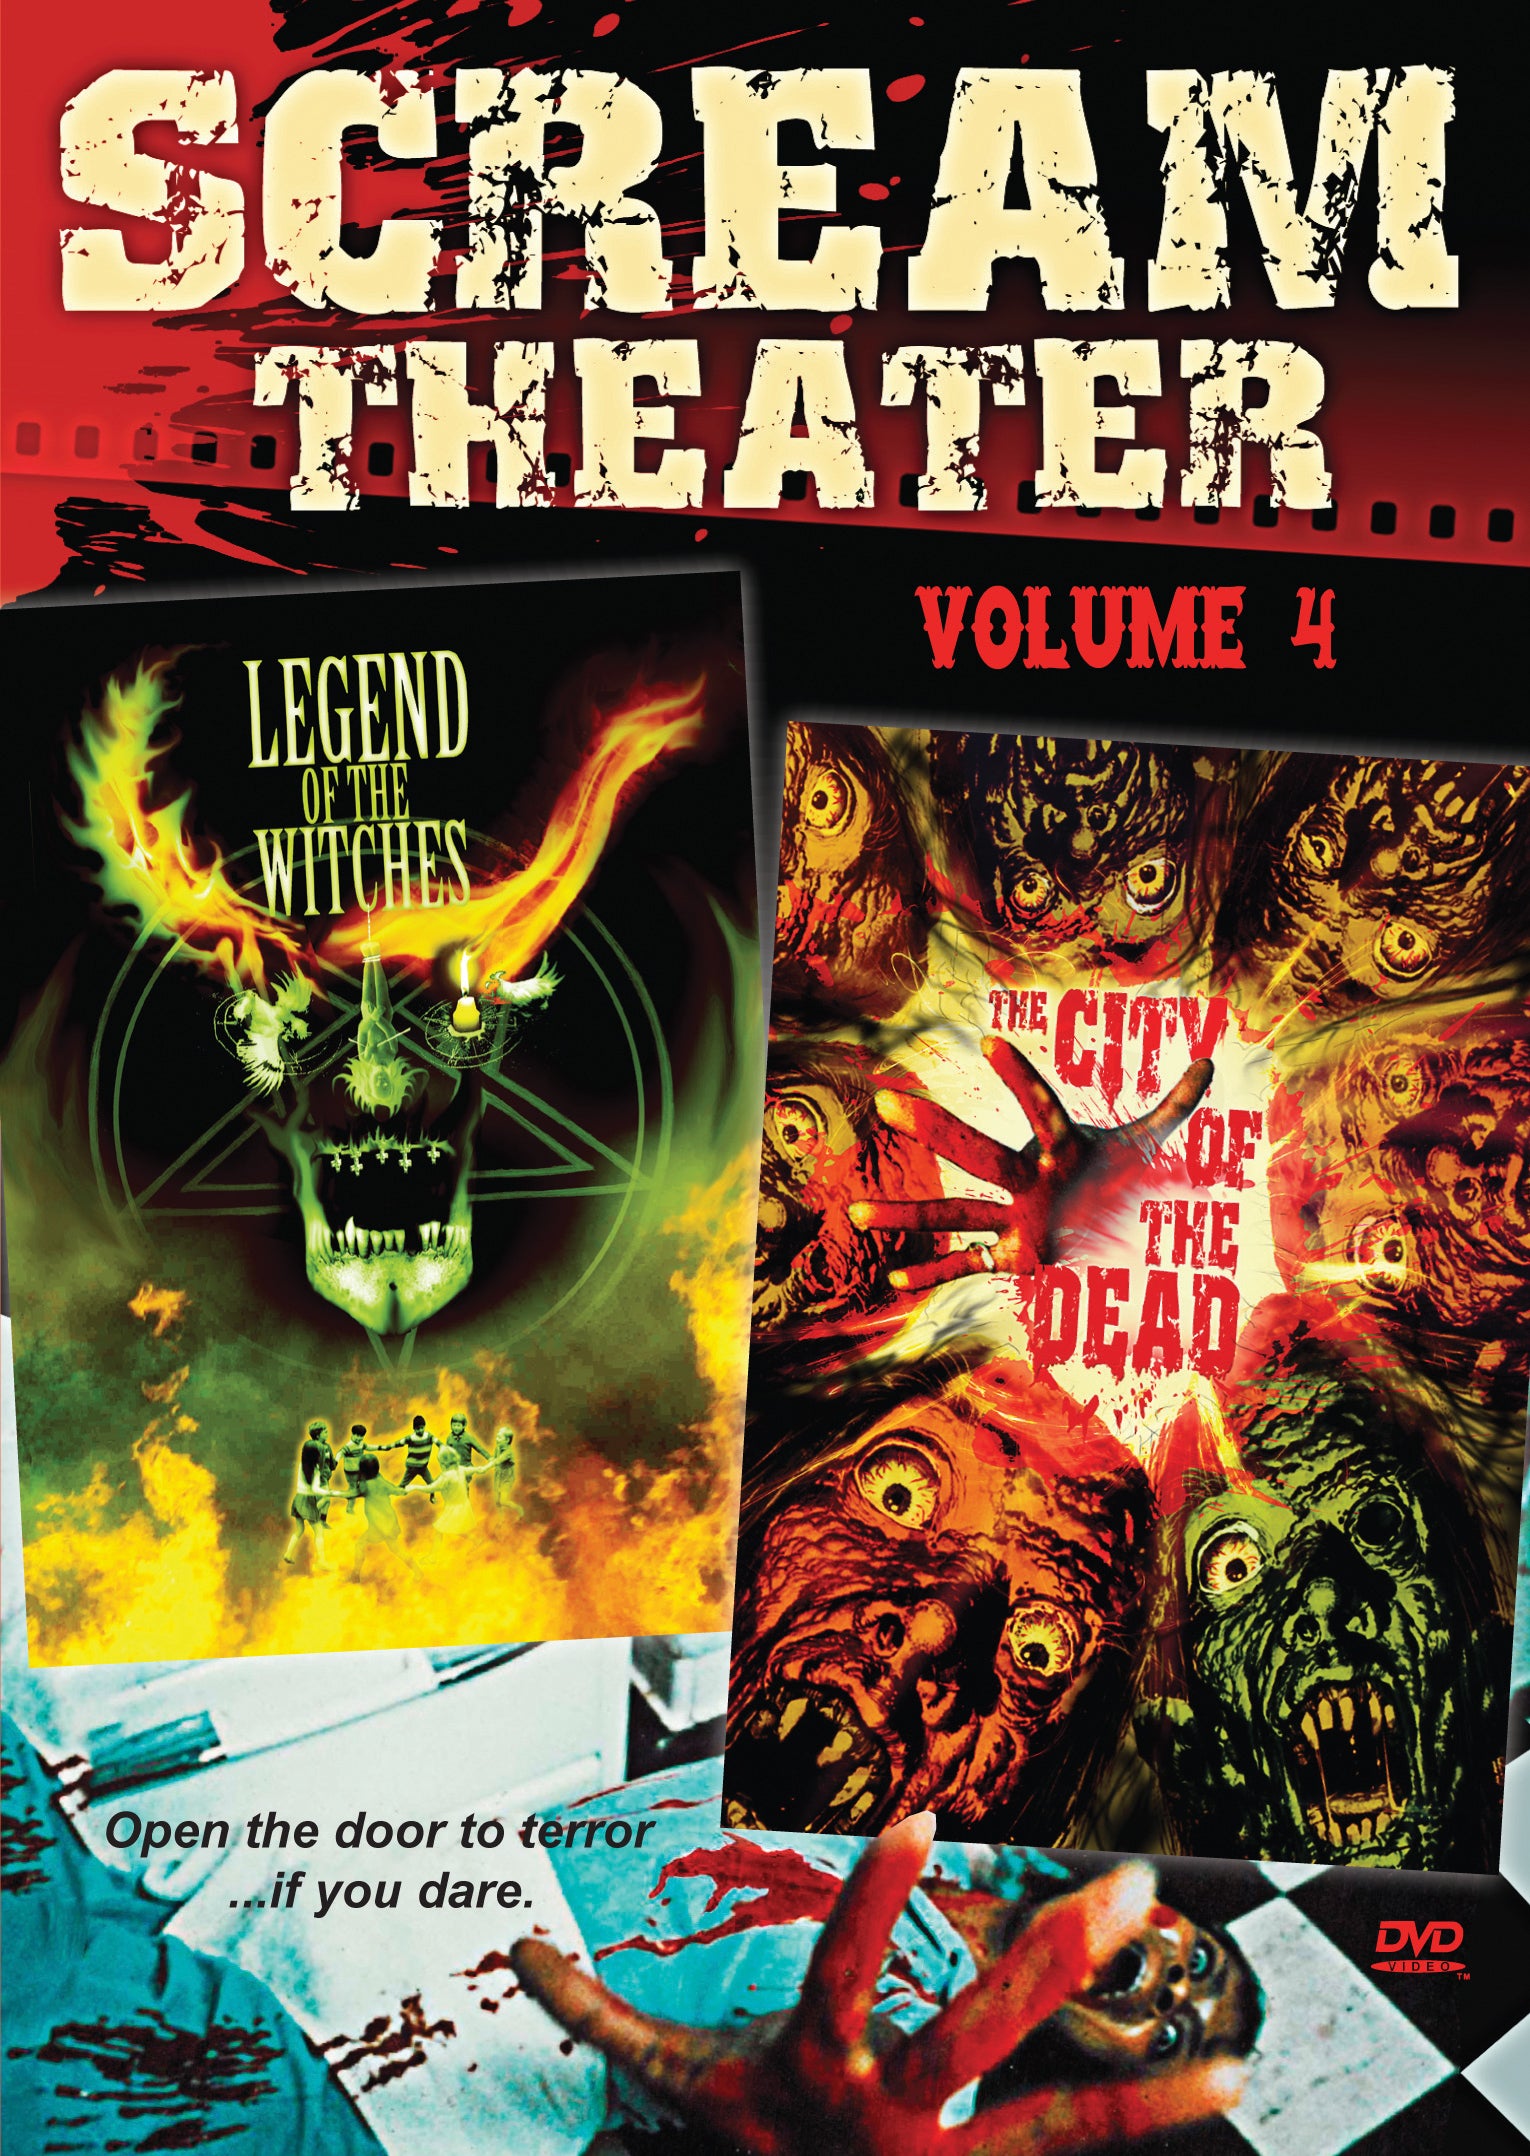 SCREAM THEATER VOLUME 4 DVD